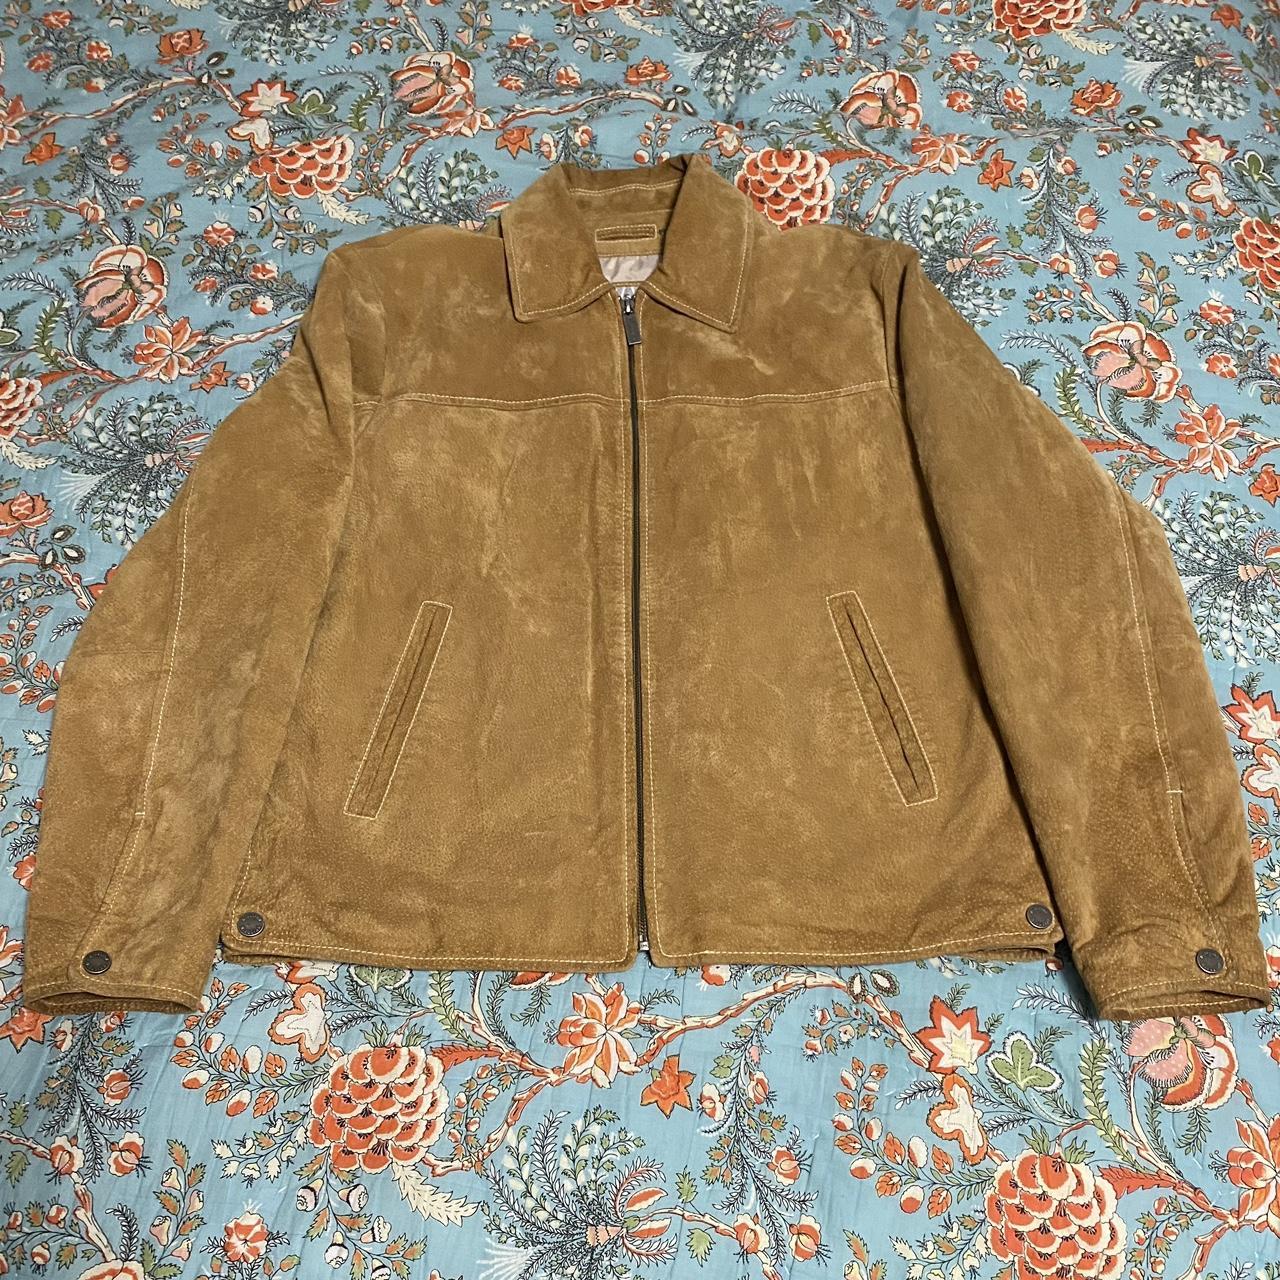 Wilson’s Leather Men's Tan and Cream Jacket